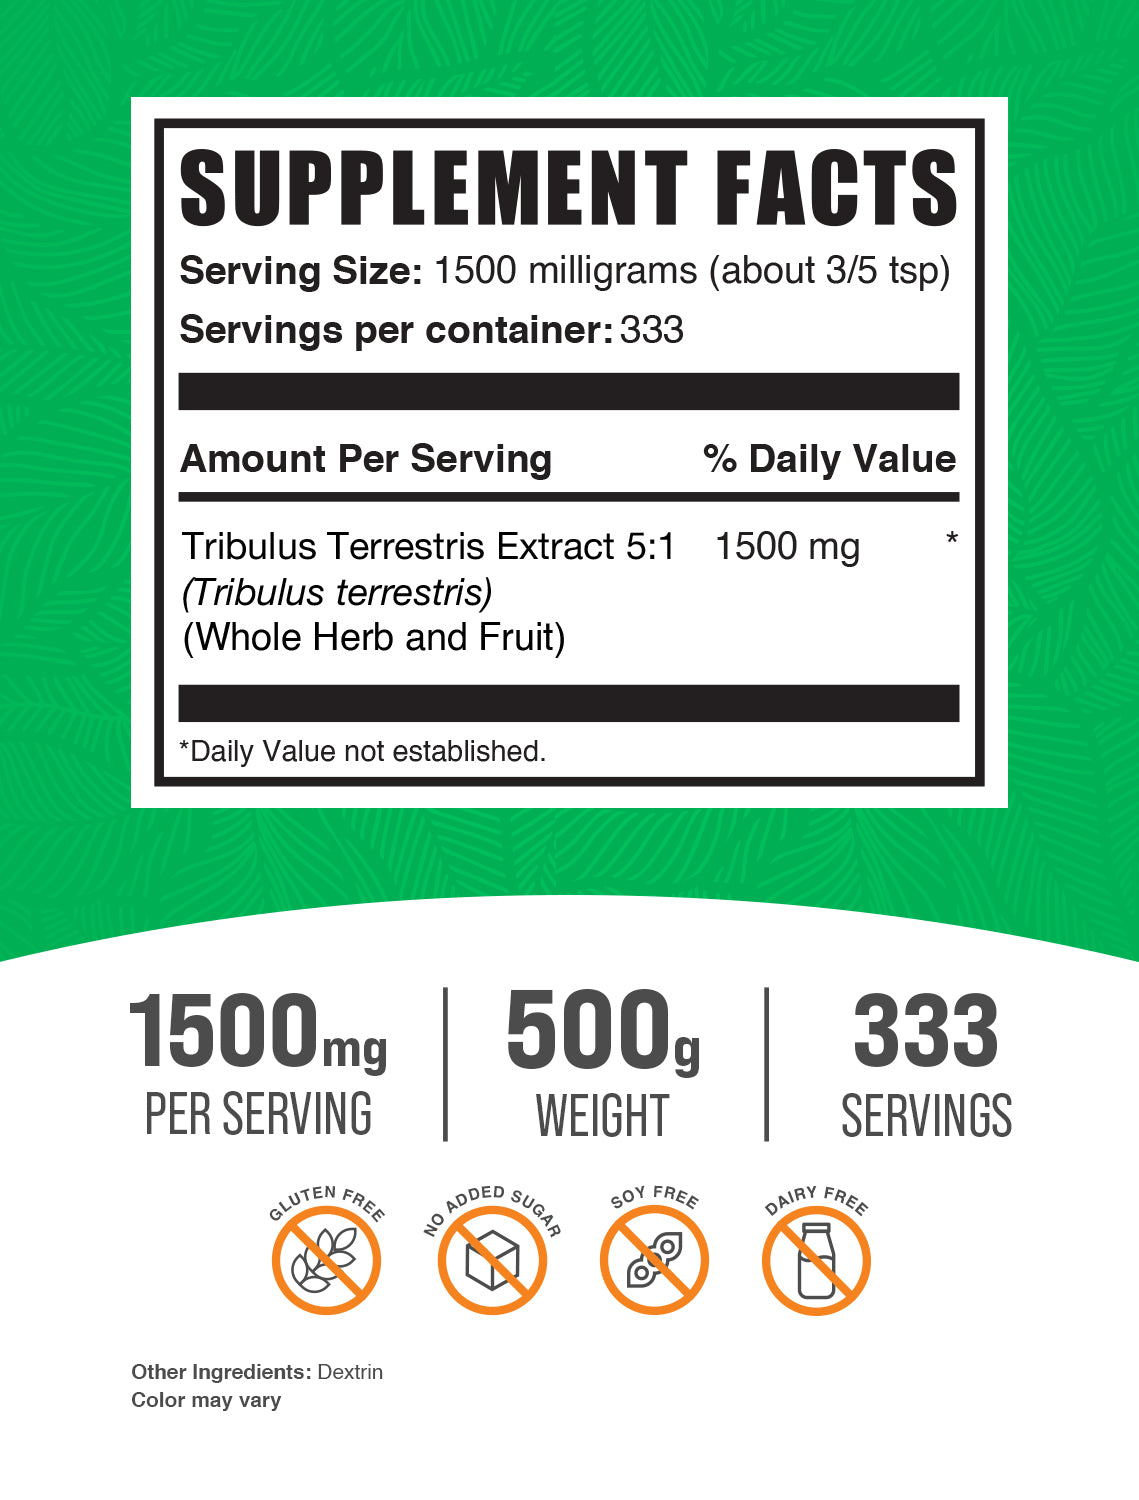 Tribulus Terrestris Extract powder label 500g